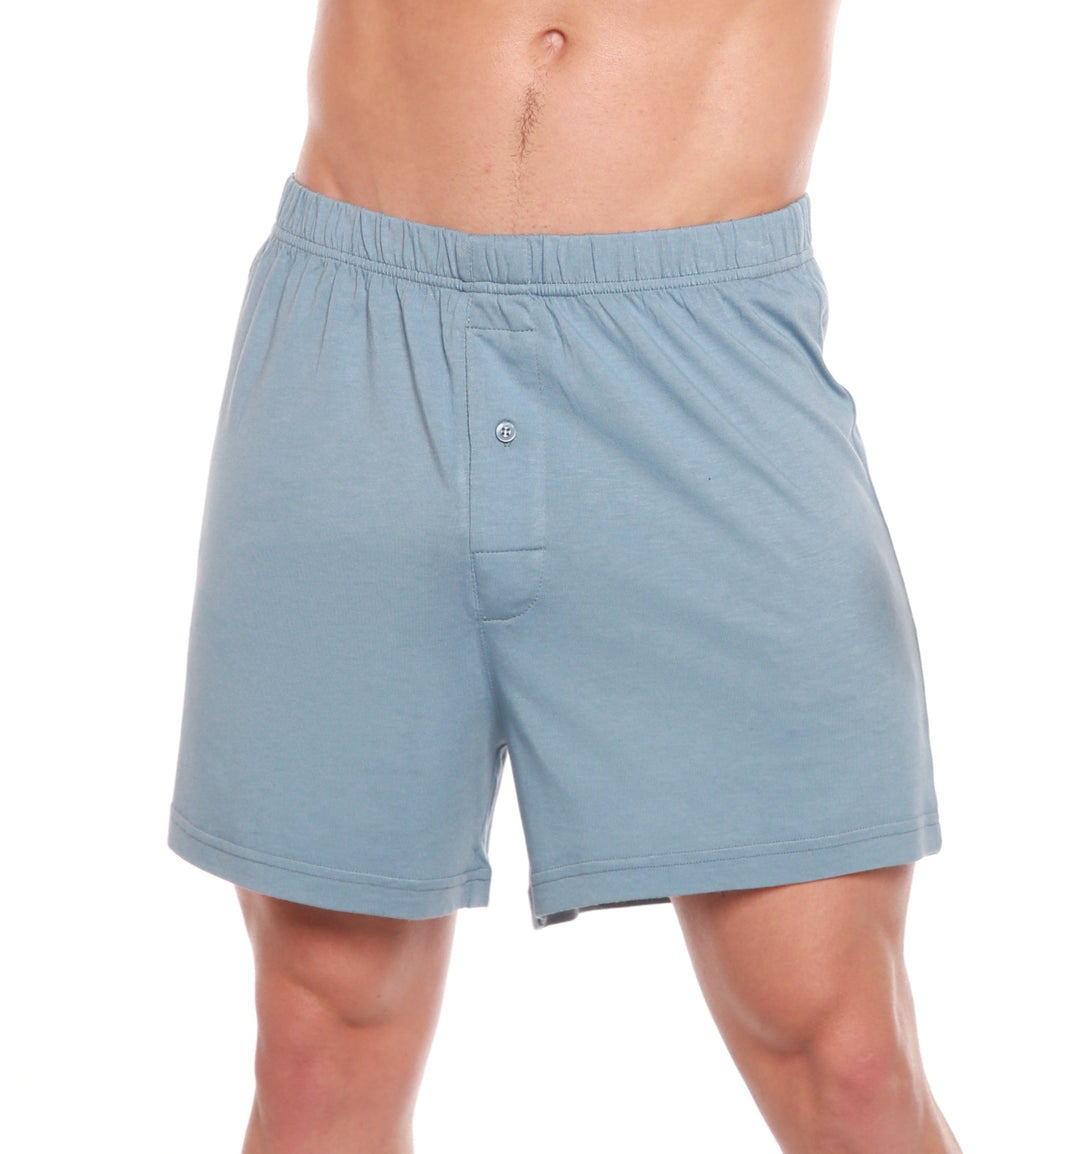 Men's Bamboo Viscose/Cotton Boxer Style Underwear